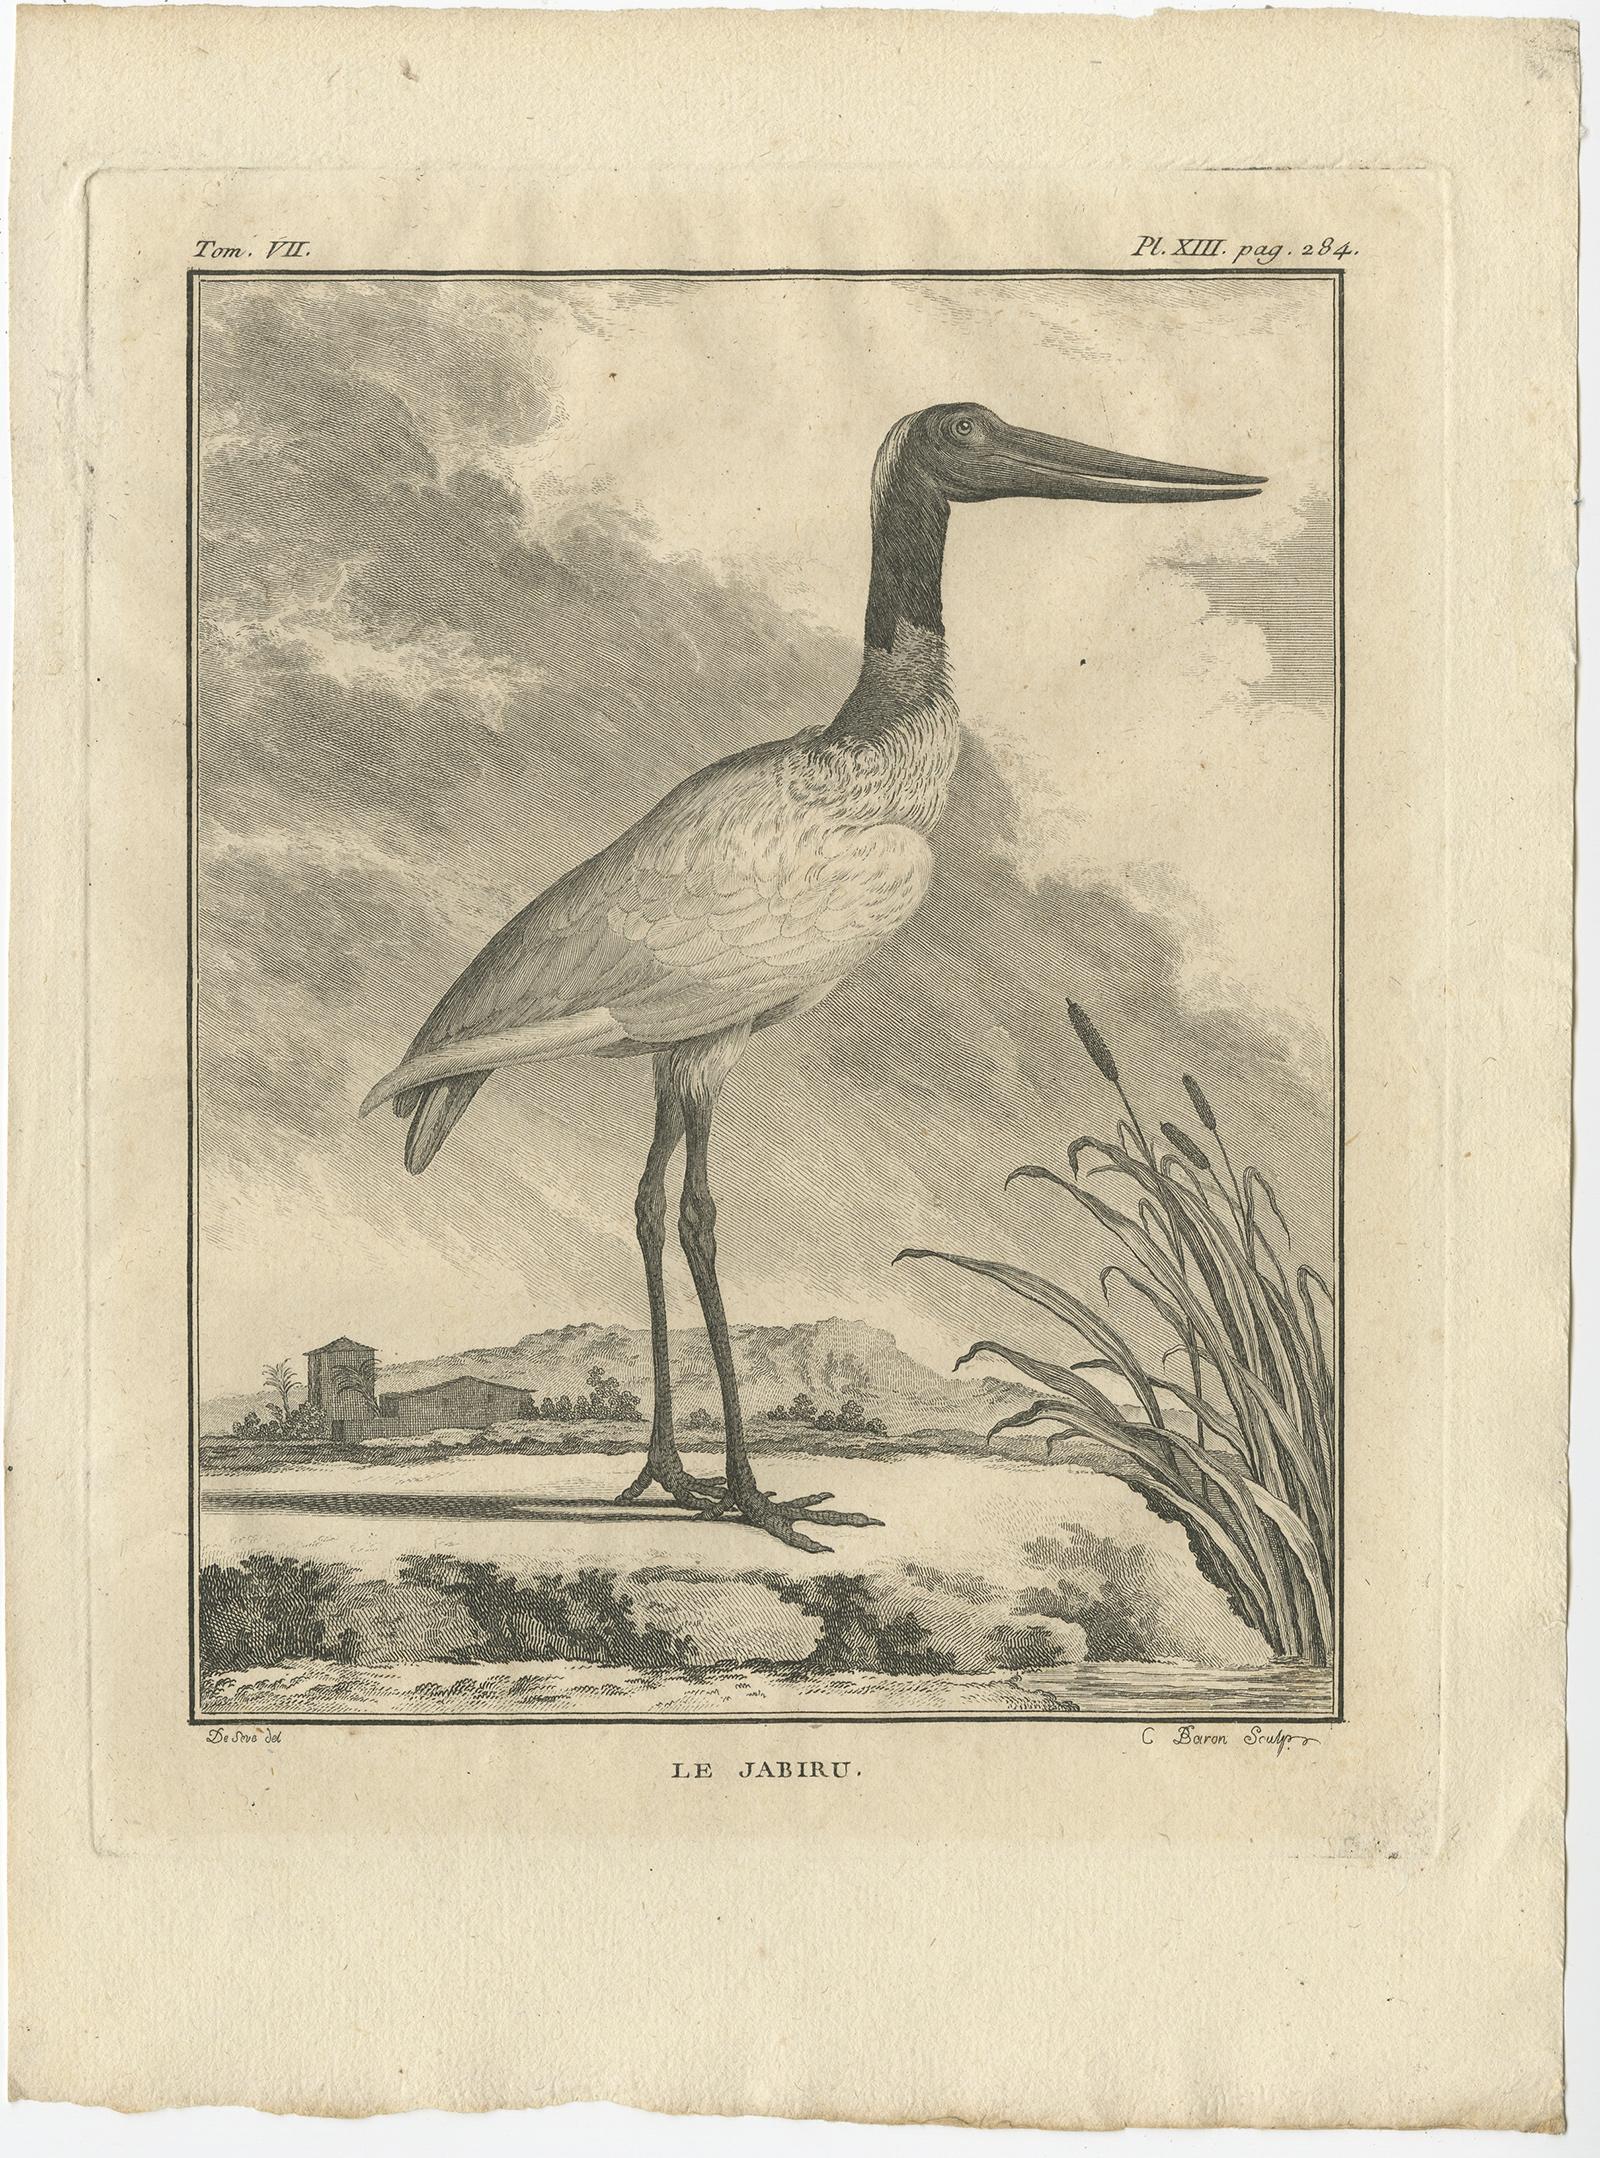 Antique print titled ‘Le Jabiru’. 

This print depicts the jabiru stork bird and originates from Buffon’s ‘Histoire Naturelle’, published in Paris 1795. 

Artists and engravers: Comte de Buffon (September 7, 1707 - April 16, 1788). French